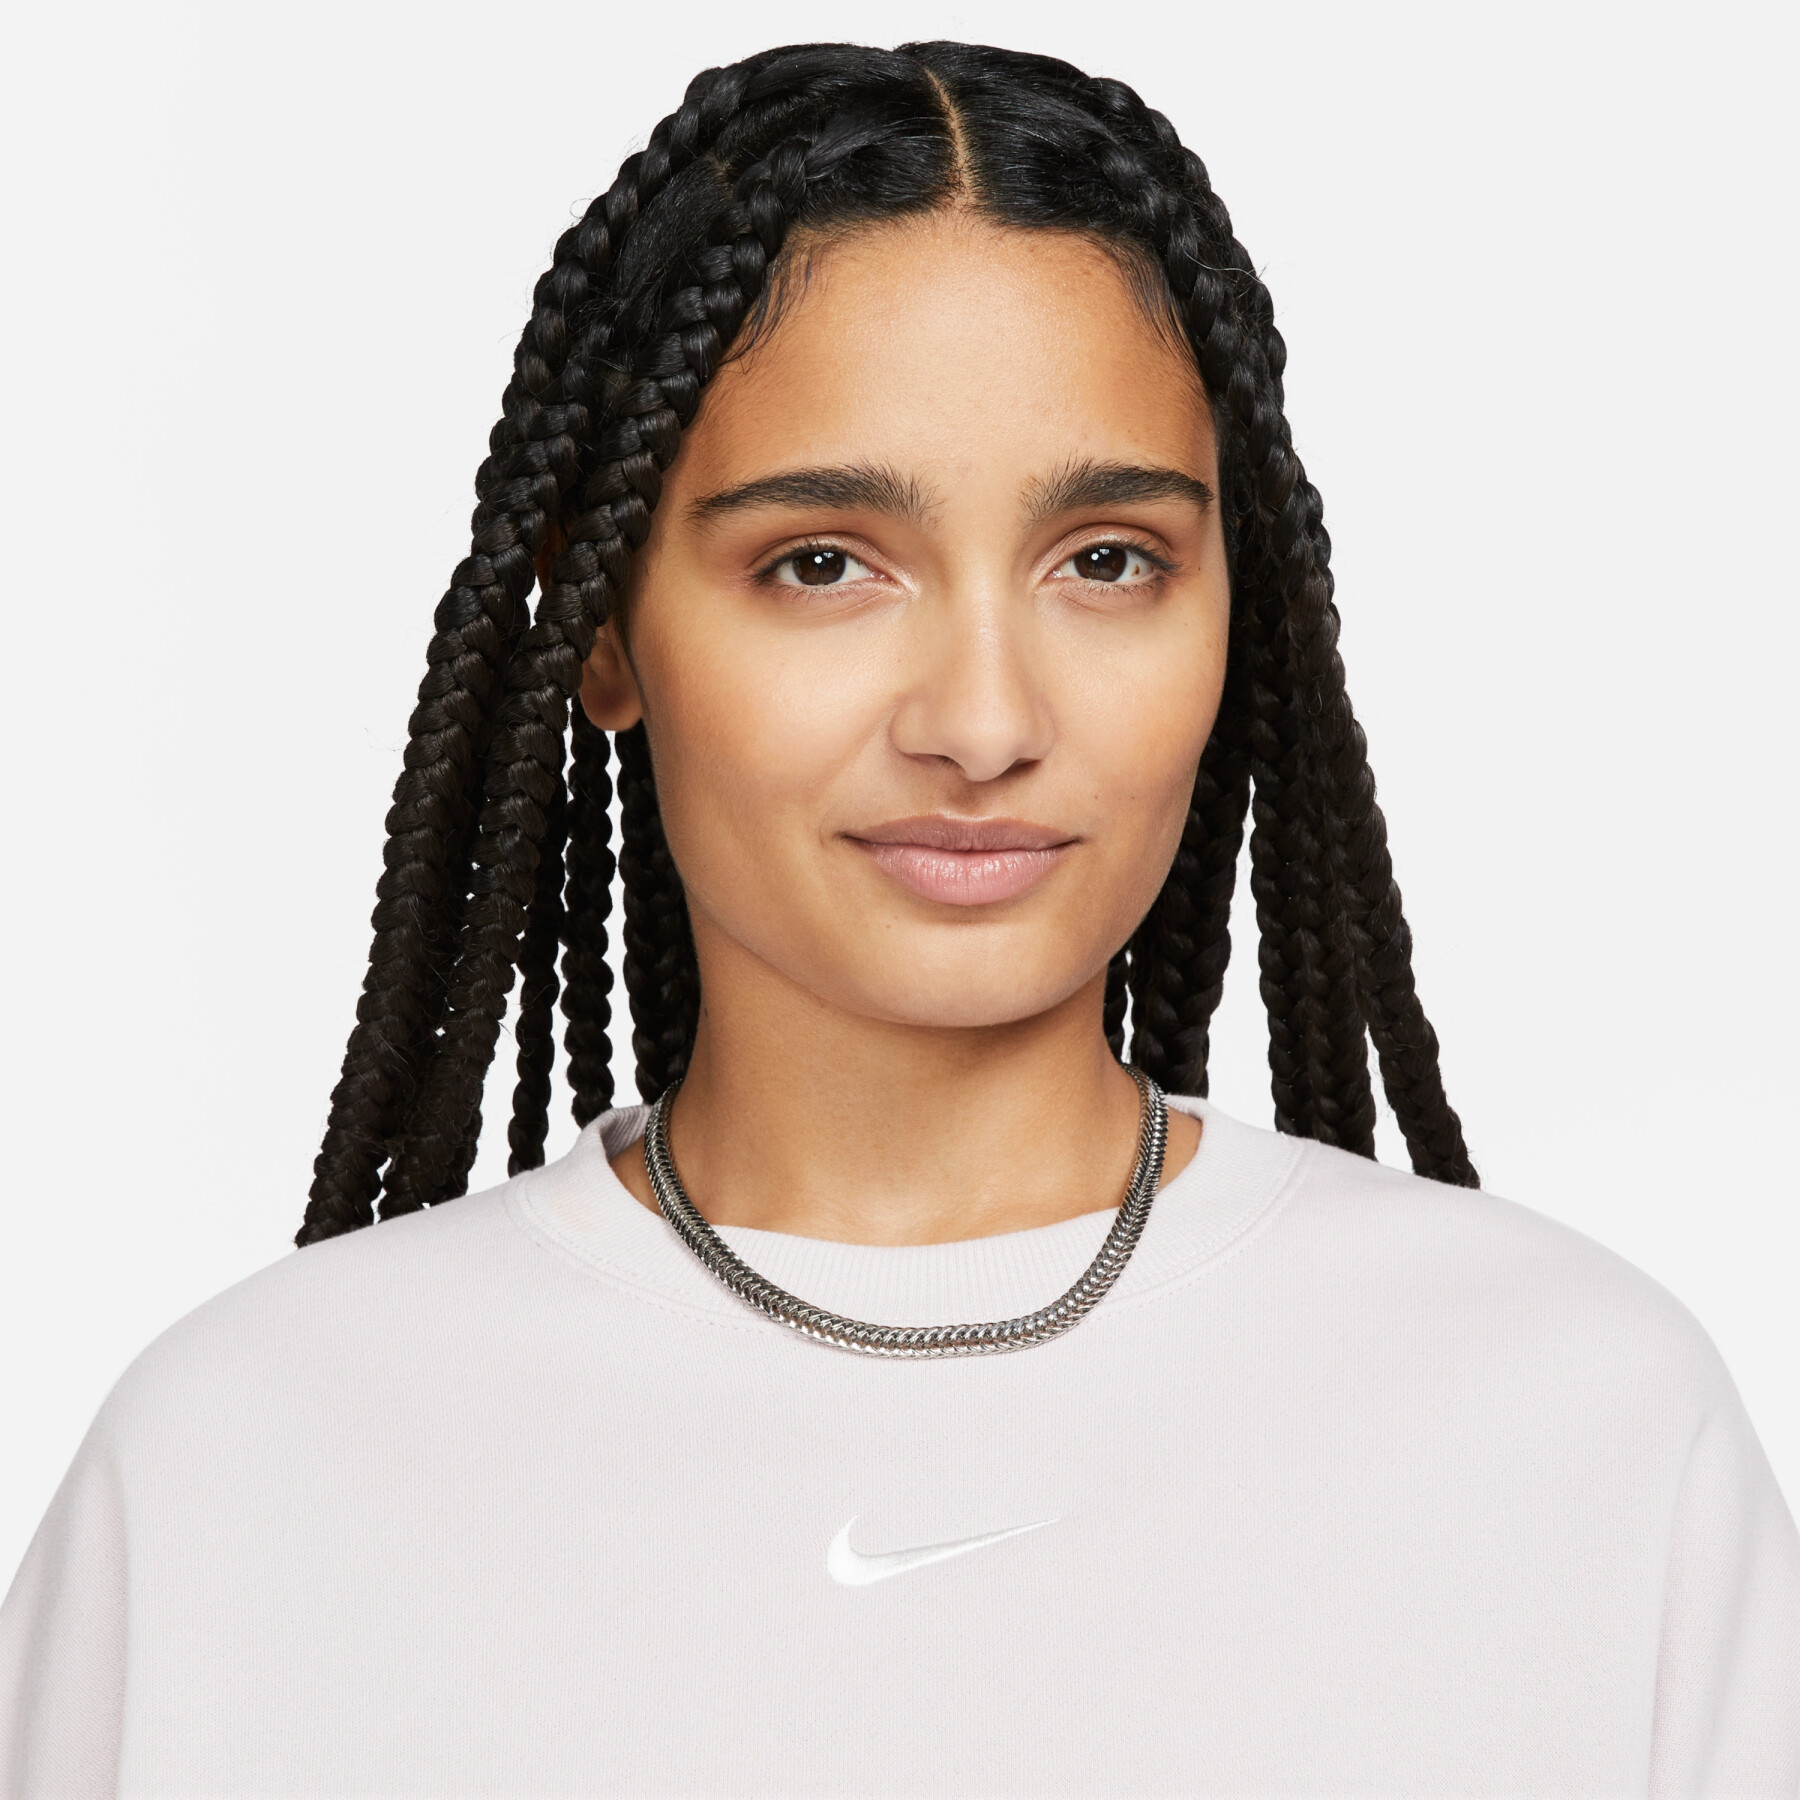 Sweatshirt mit Rundhalsausschnitt ultra-oversize Frau Nike Phoenix Fleece